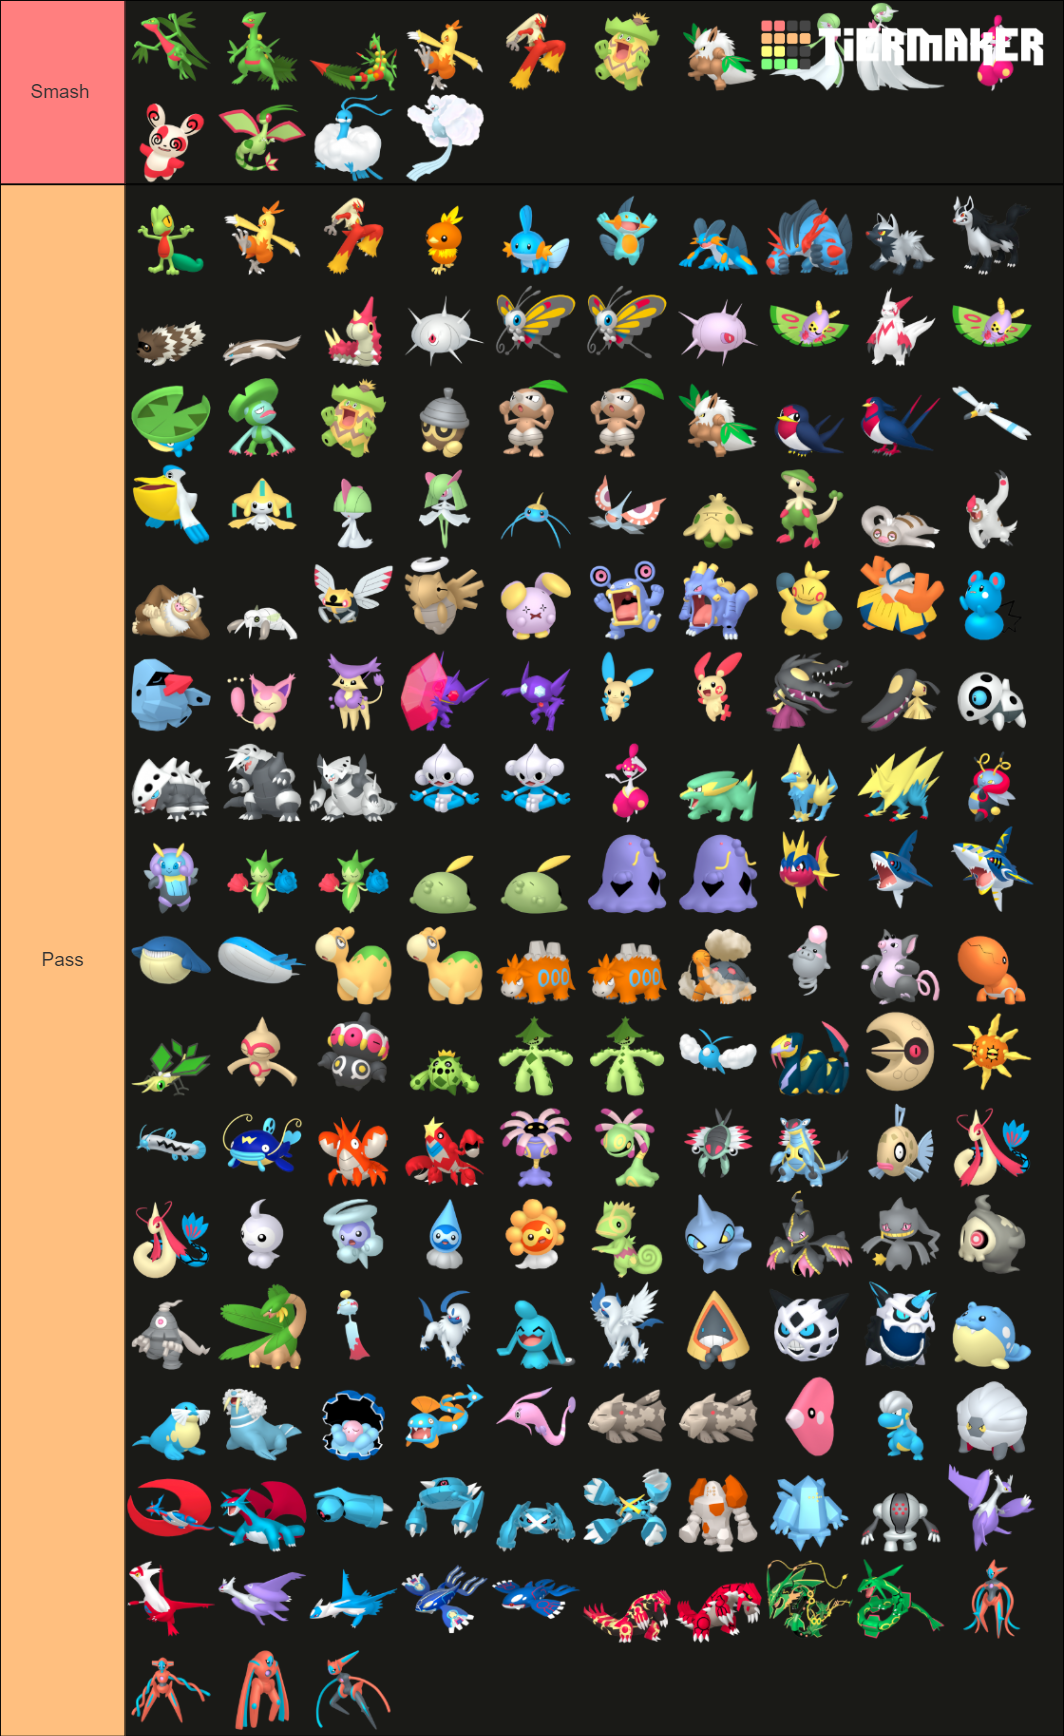 Pokémon Smash Or Pass Gen 3 Tier List Community Rankings Tiermaker 